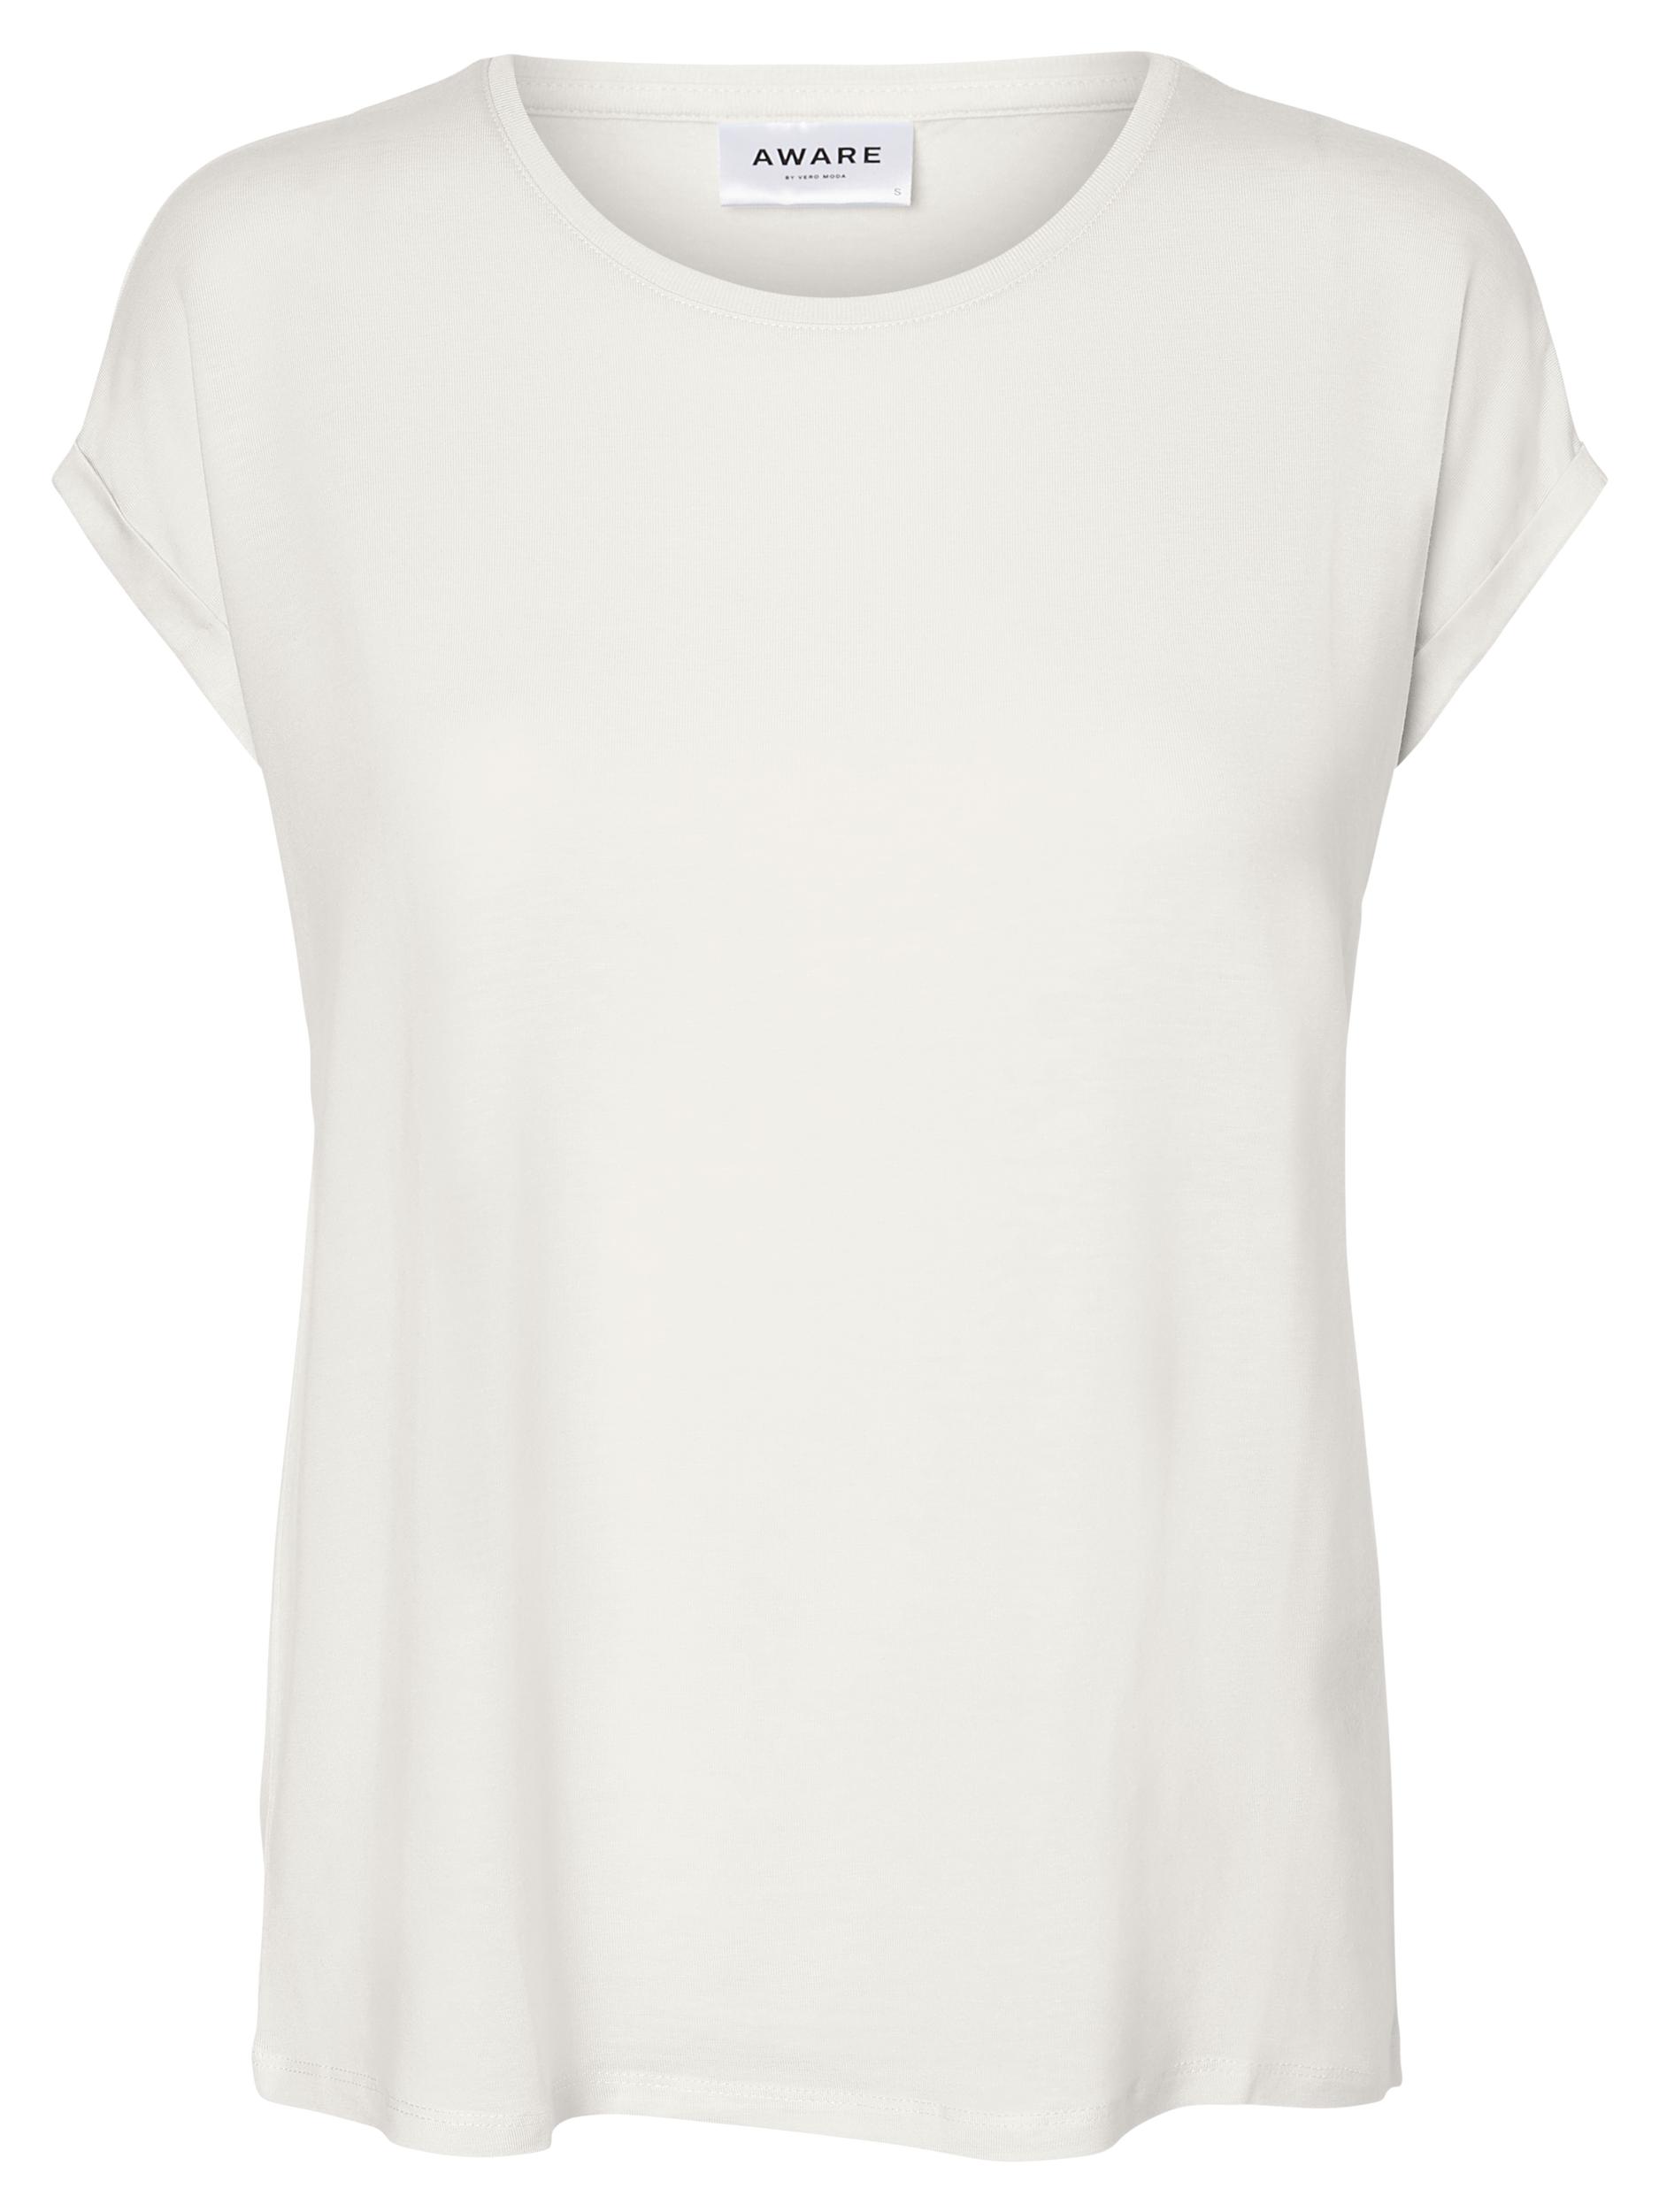 AWARE | Ava T-Shirt, SNOW WHITE, large